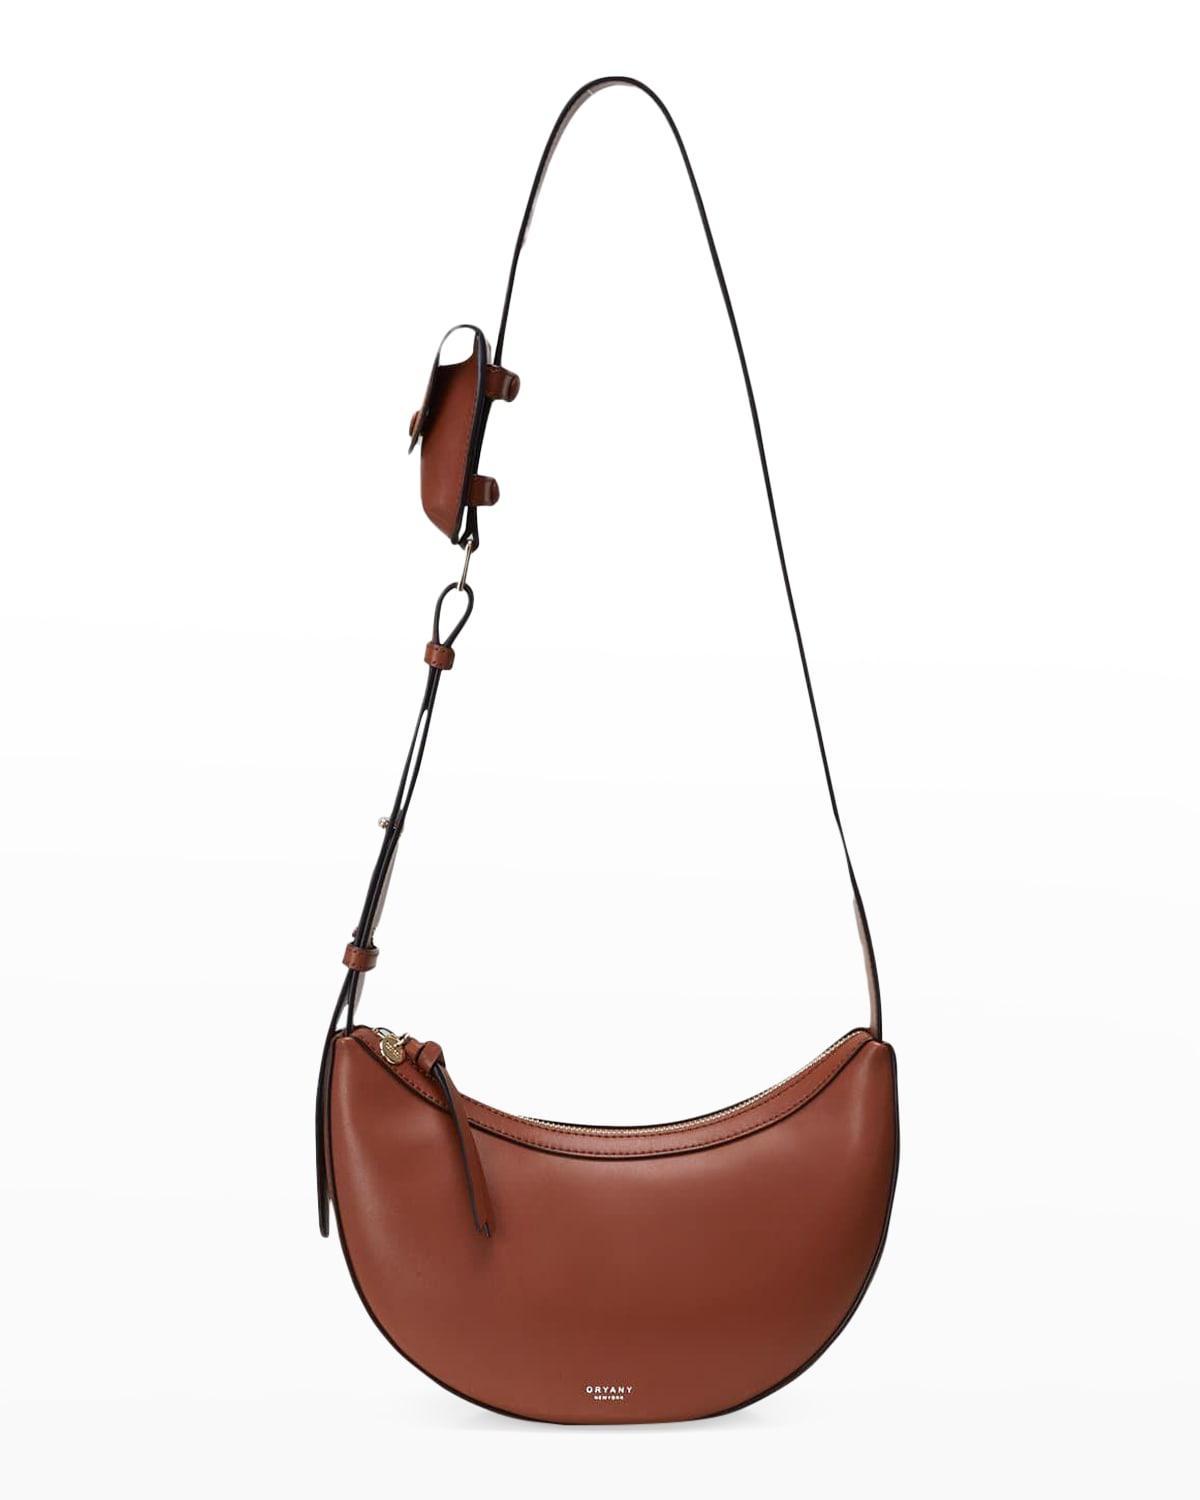 Oryany Rookie Half-Moon Leather Crossbody Bag - Toffee TanDAMAGE Product Image